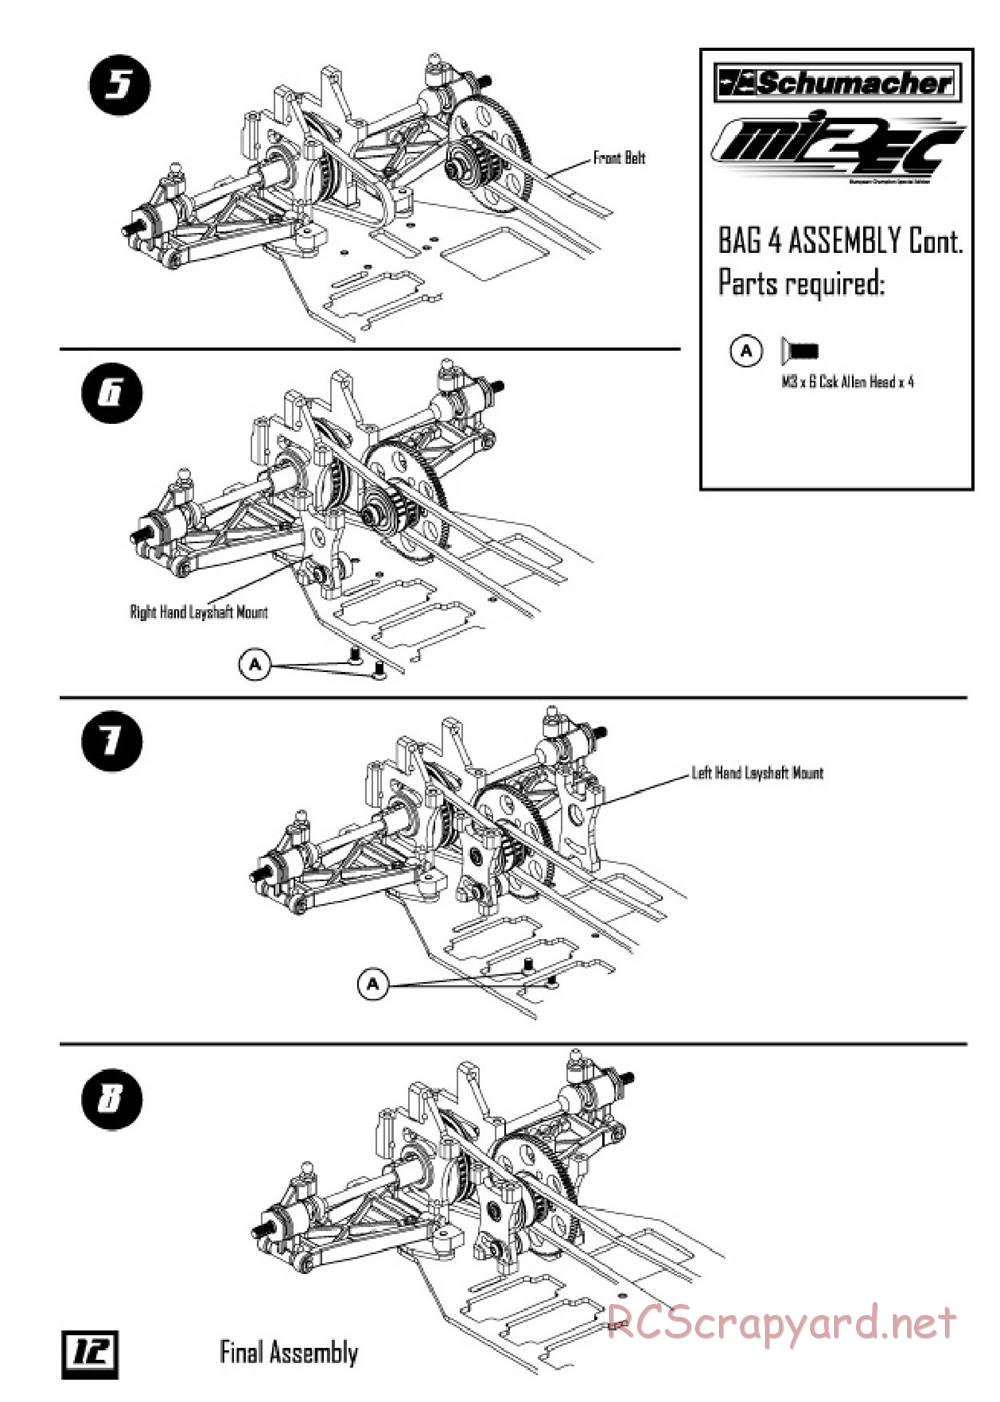 Schumacher - Mi2 EC - Manual - Page 14